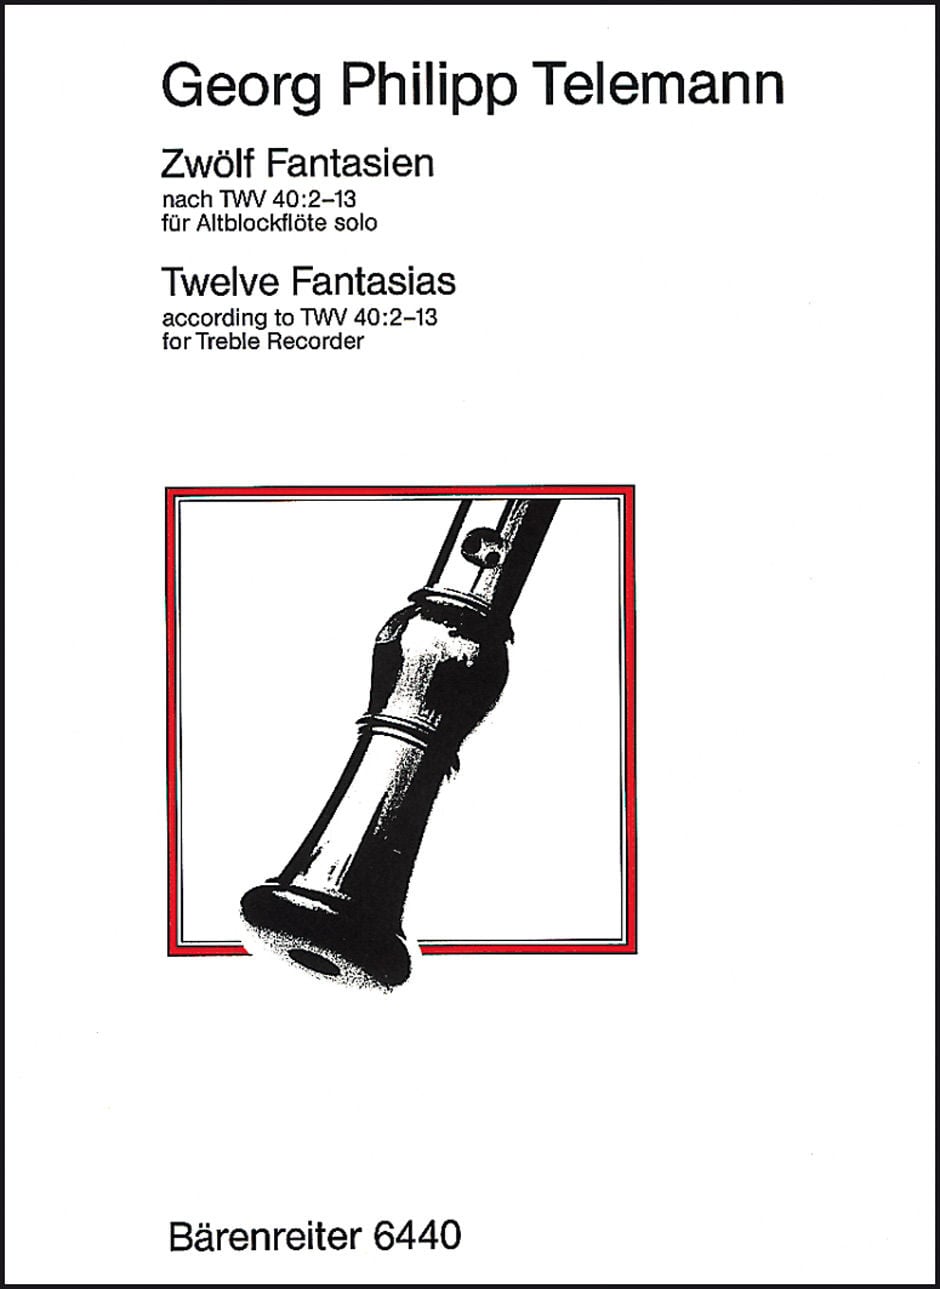 Telemann: Twelve Fantasias for Treble Recorder Solo published by Barenreiter